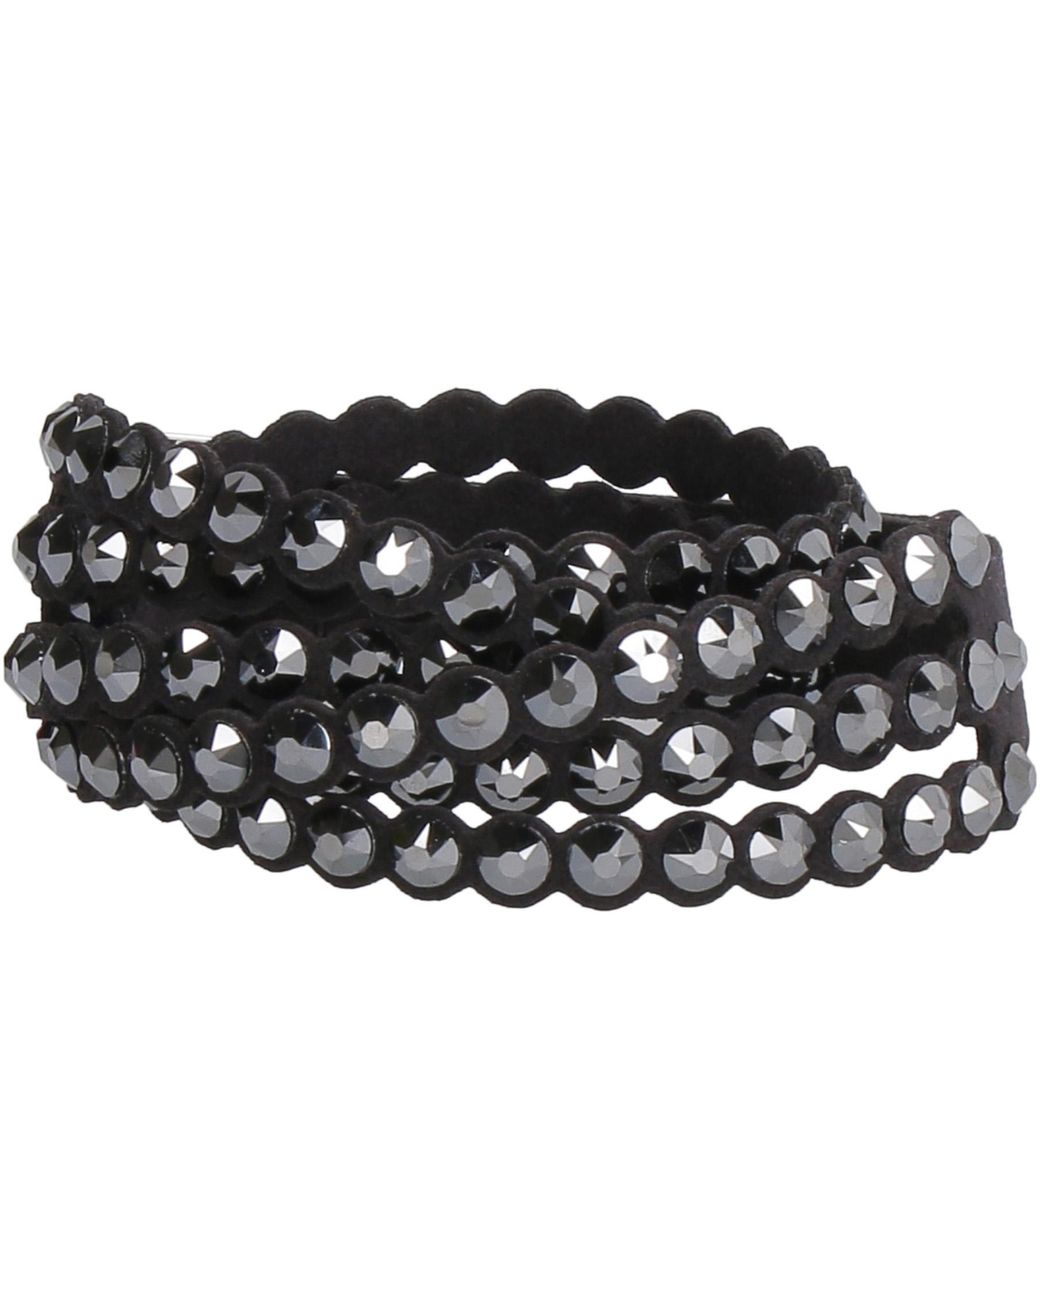 Swarovski Slake Black Bracelet with Jet Hematite Crystals - Gently Used |  #1814120676